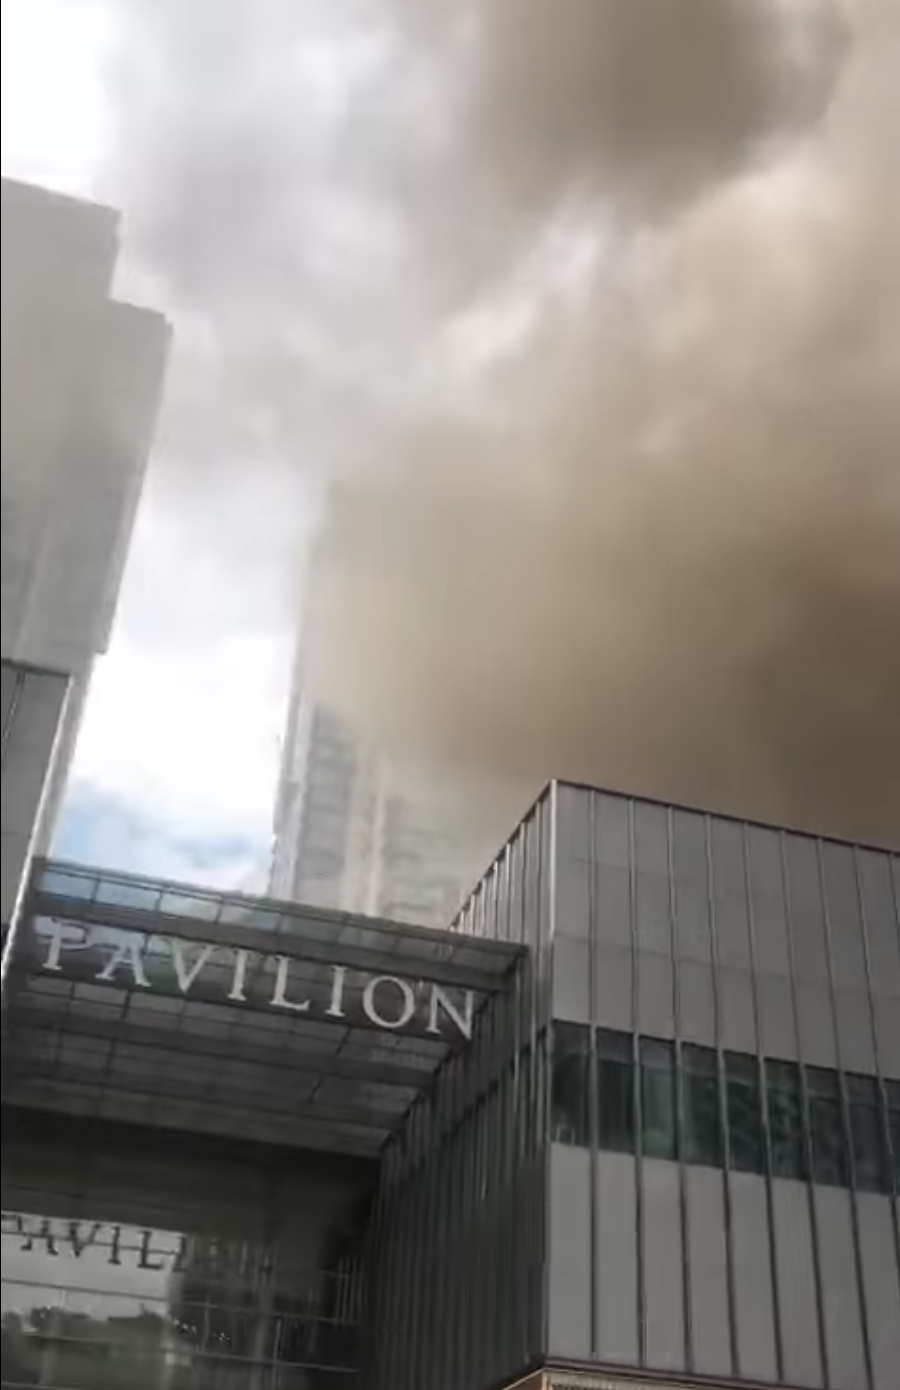 Pavilion KL fire - smoke